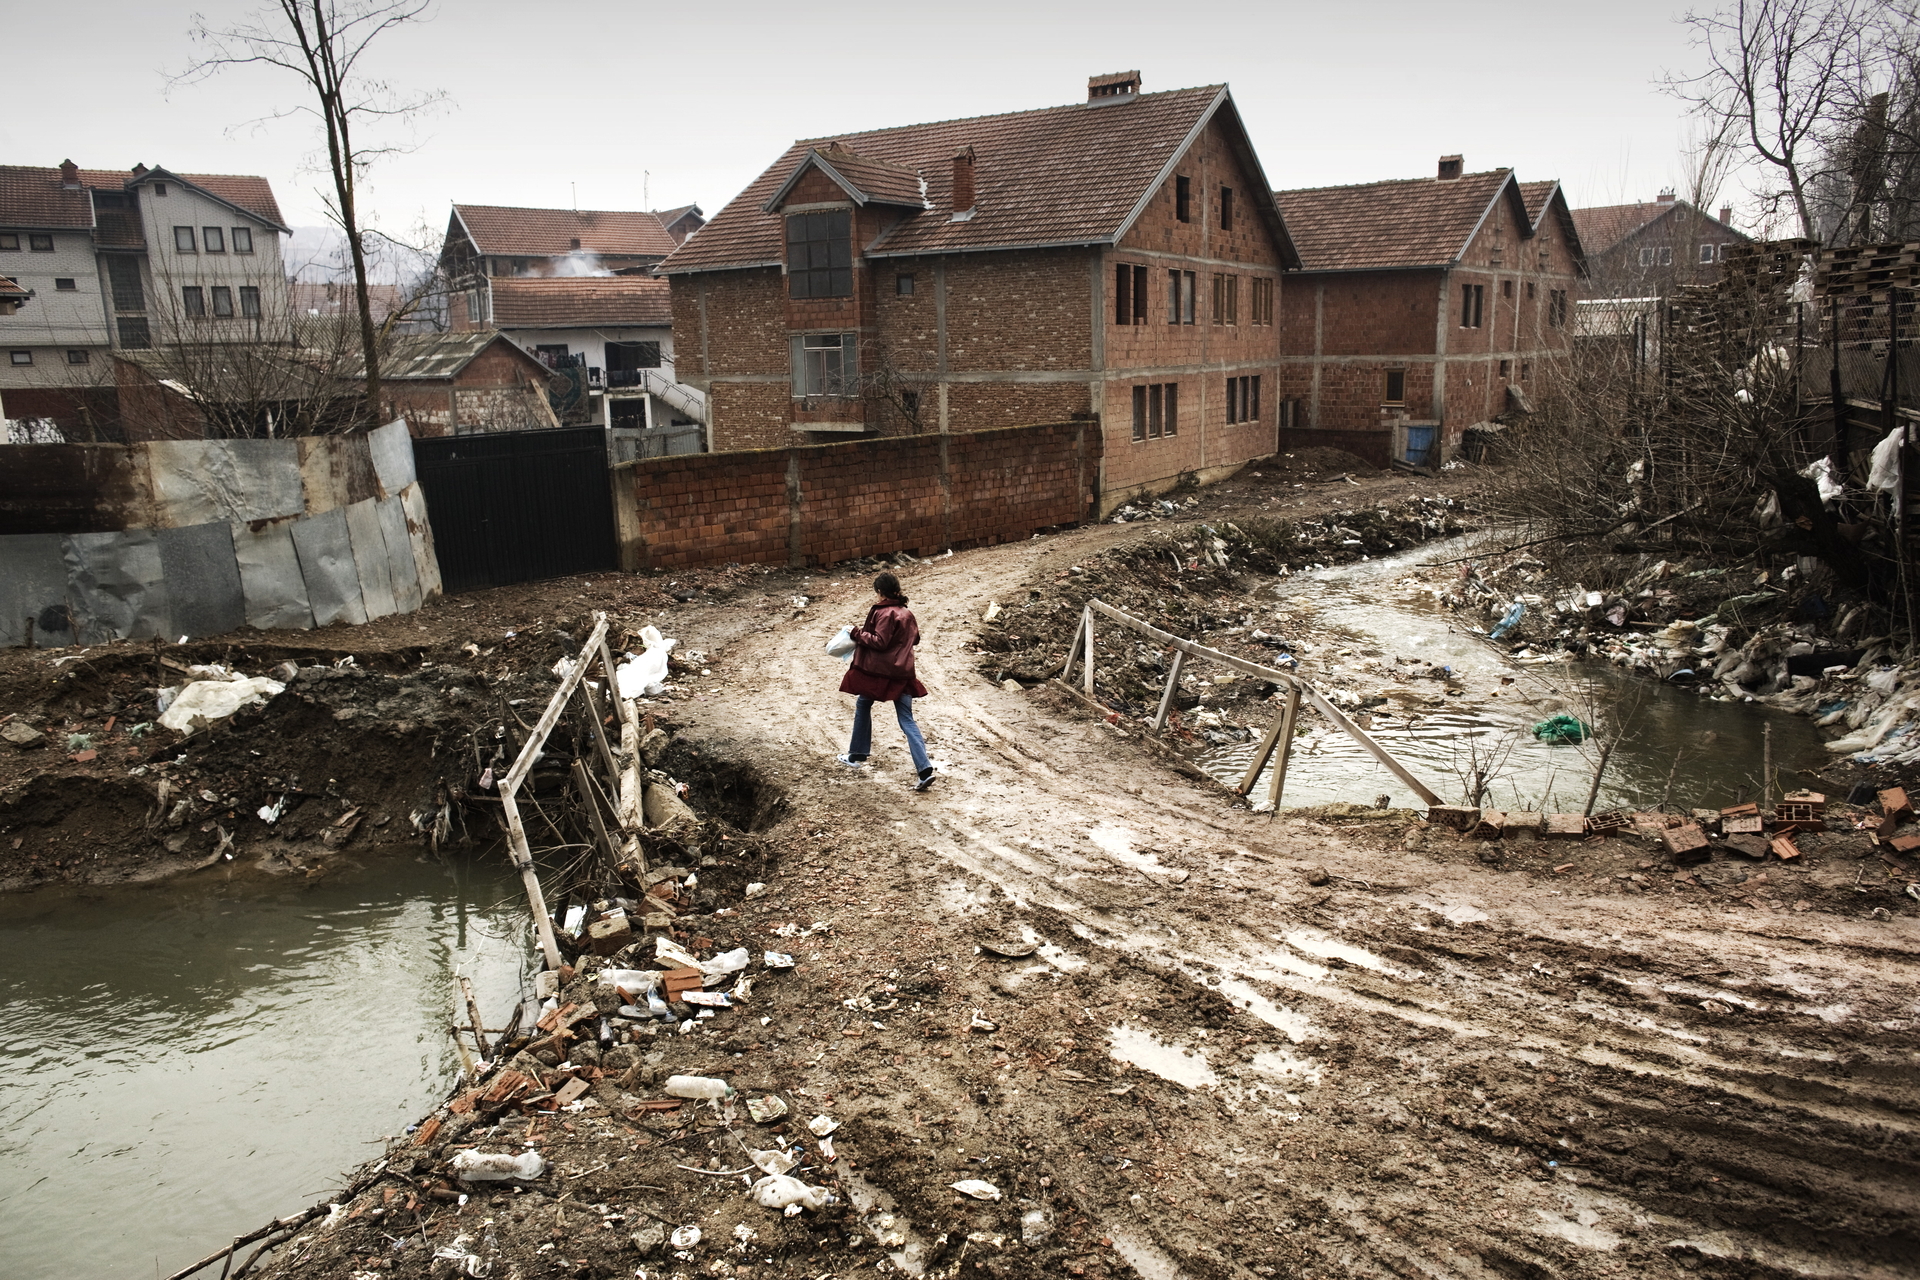 Kosovo conflict